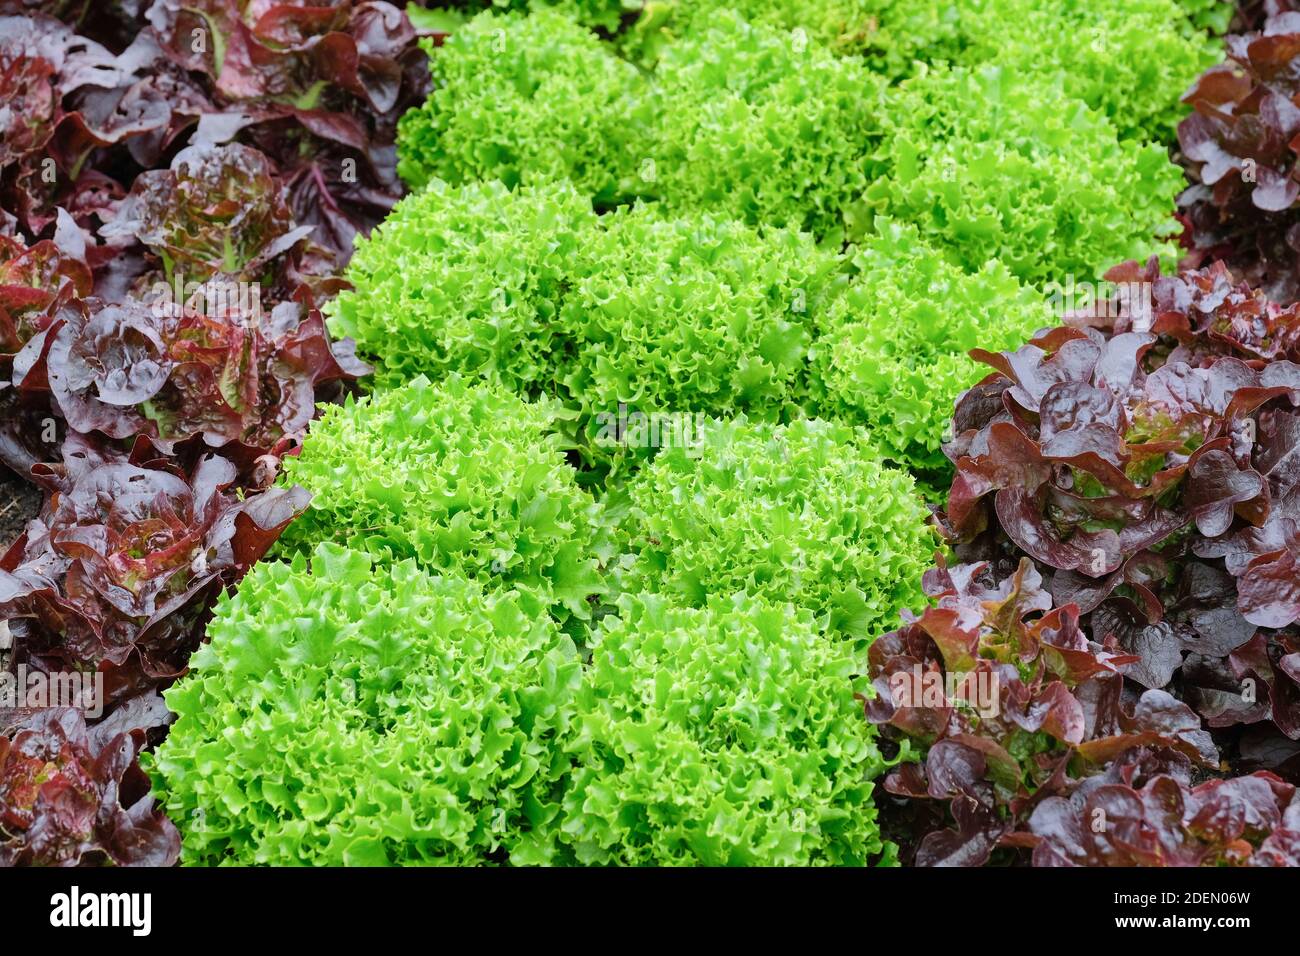 Loose-Leaf, grüner Salat 'azur' wächst mit rotblättrigen cos Salat, roter Salat 'Amaze'. Lactuca sativa ' mazur'. Lactuca sativa Amaze Stockfoto